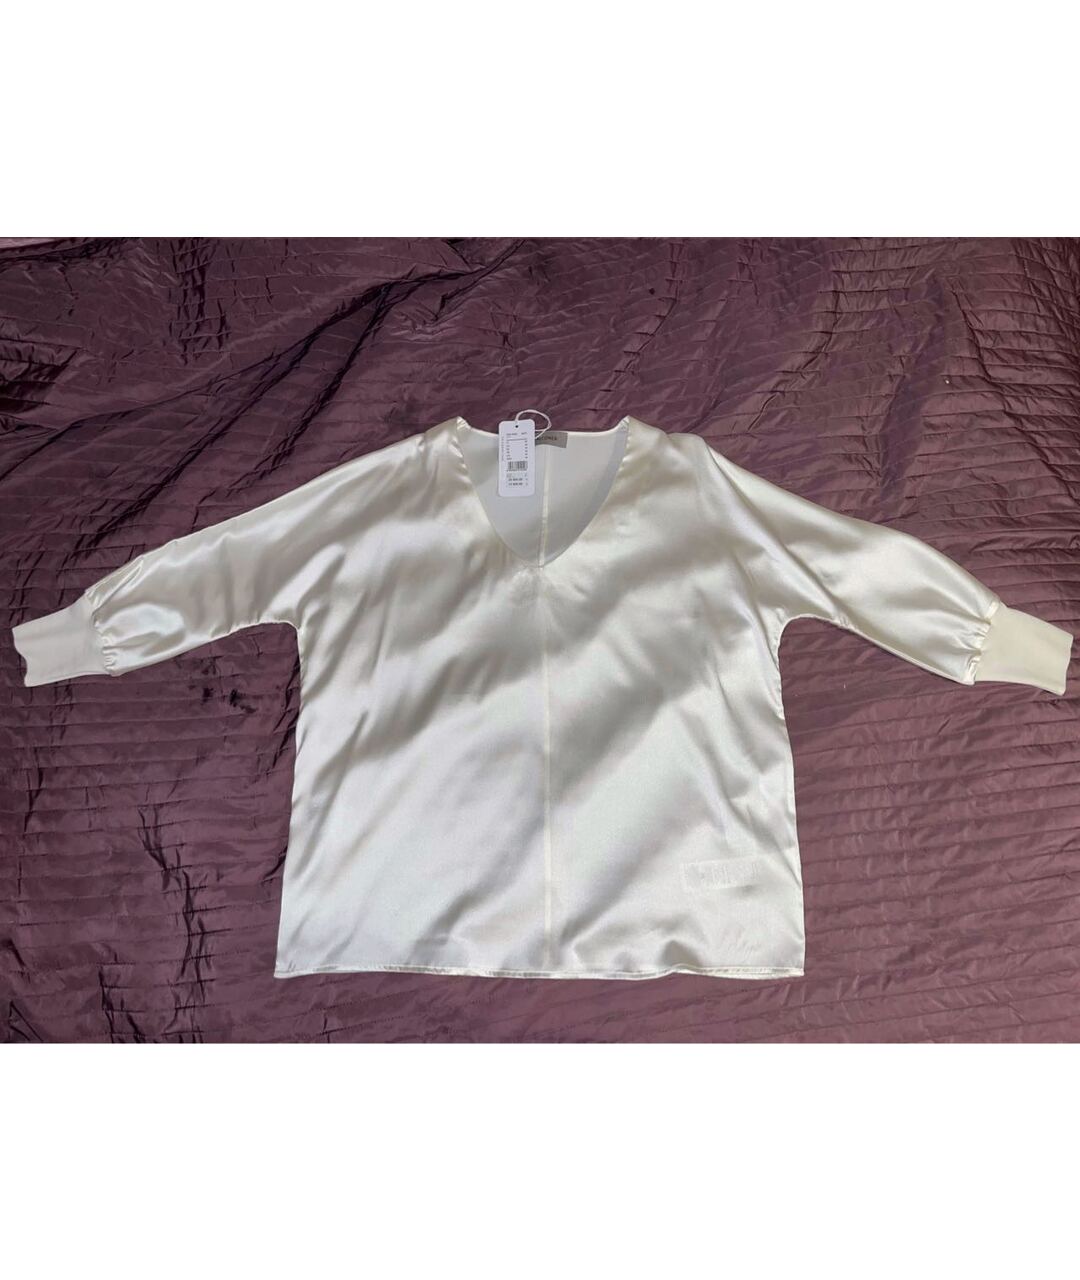 Falconeri Белая шелковая рубашка, фото 2